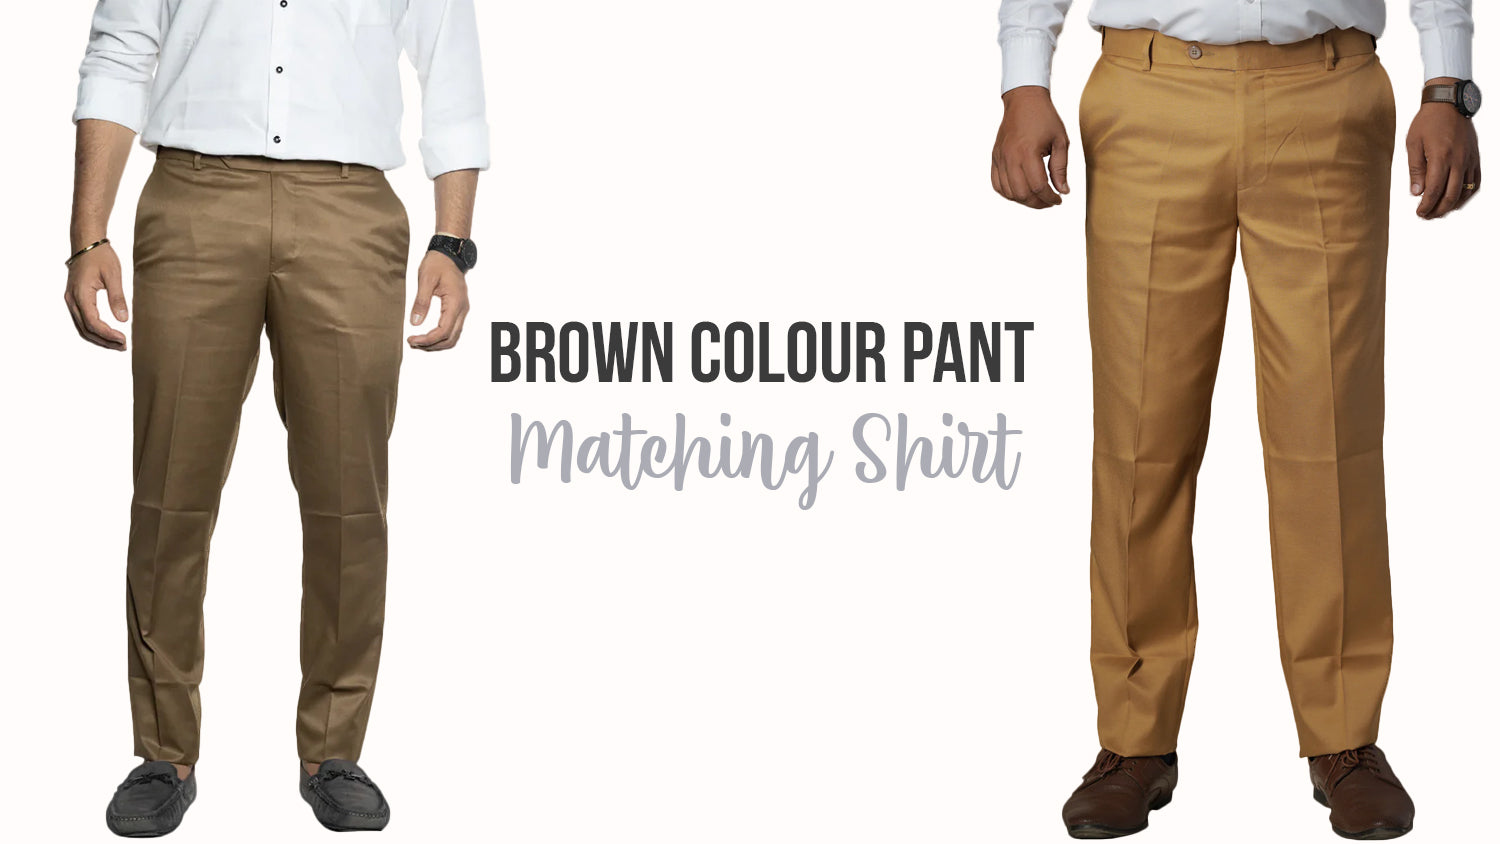 Brown Colour Pant Matching Shirt